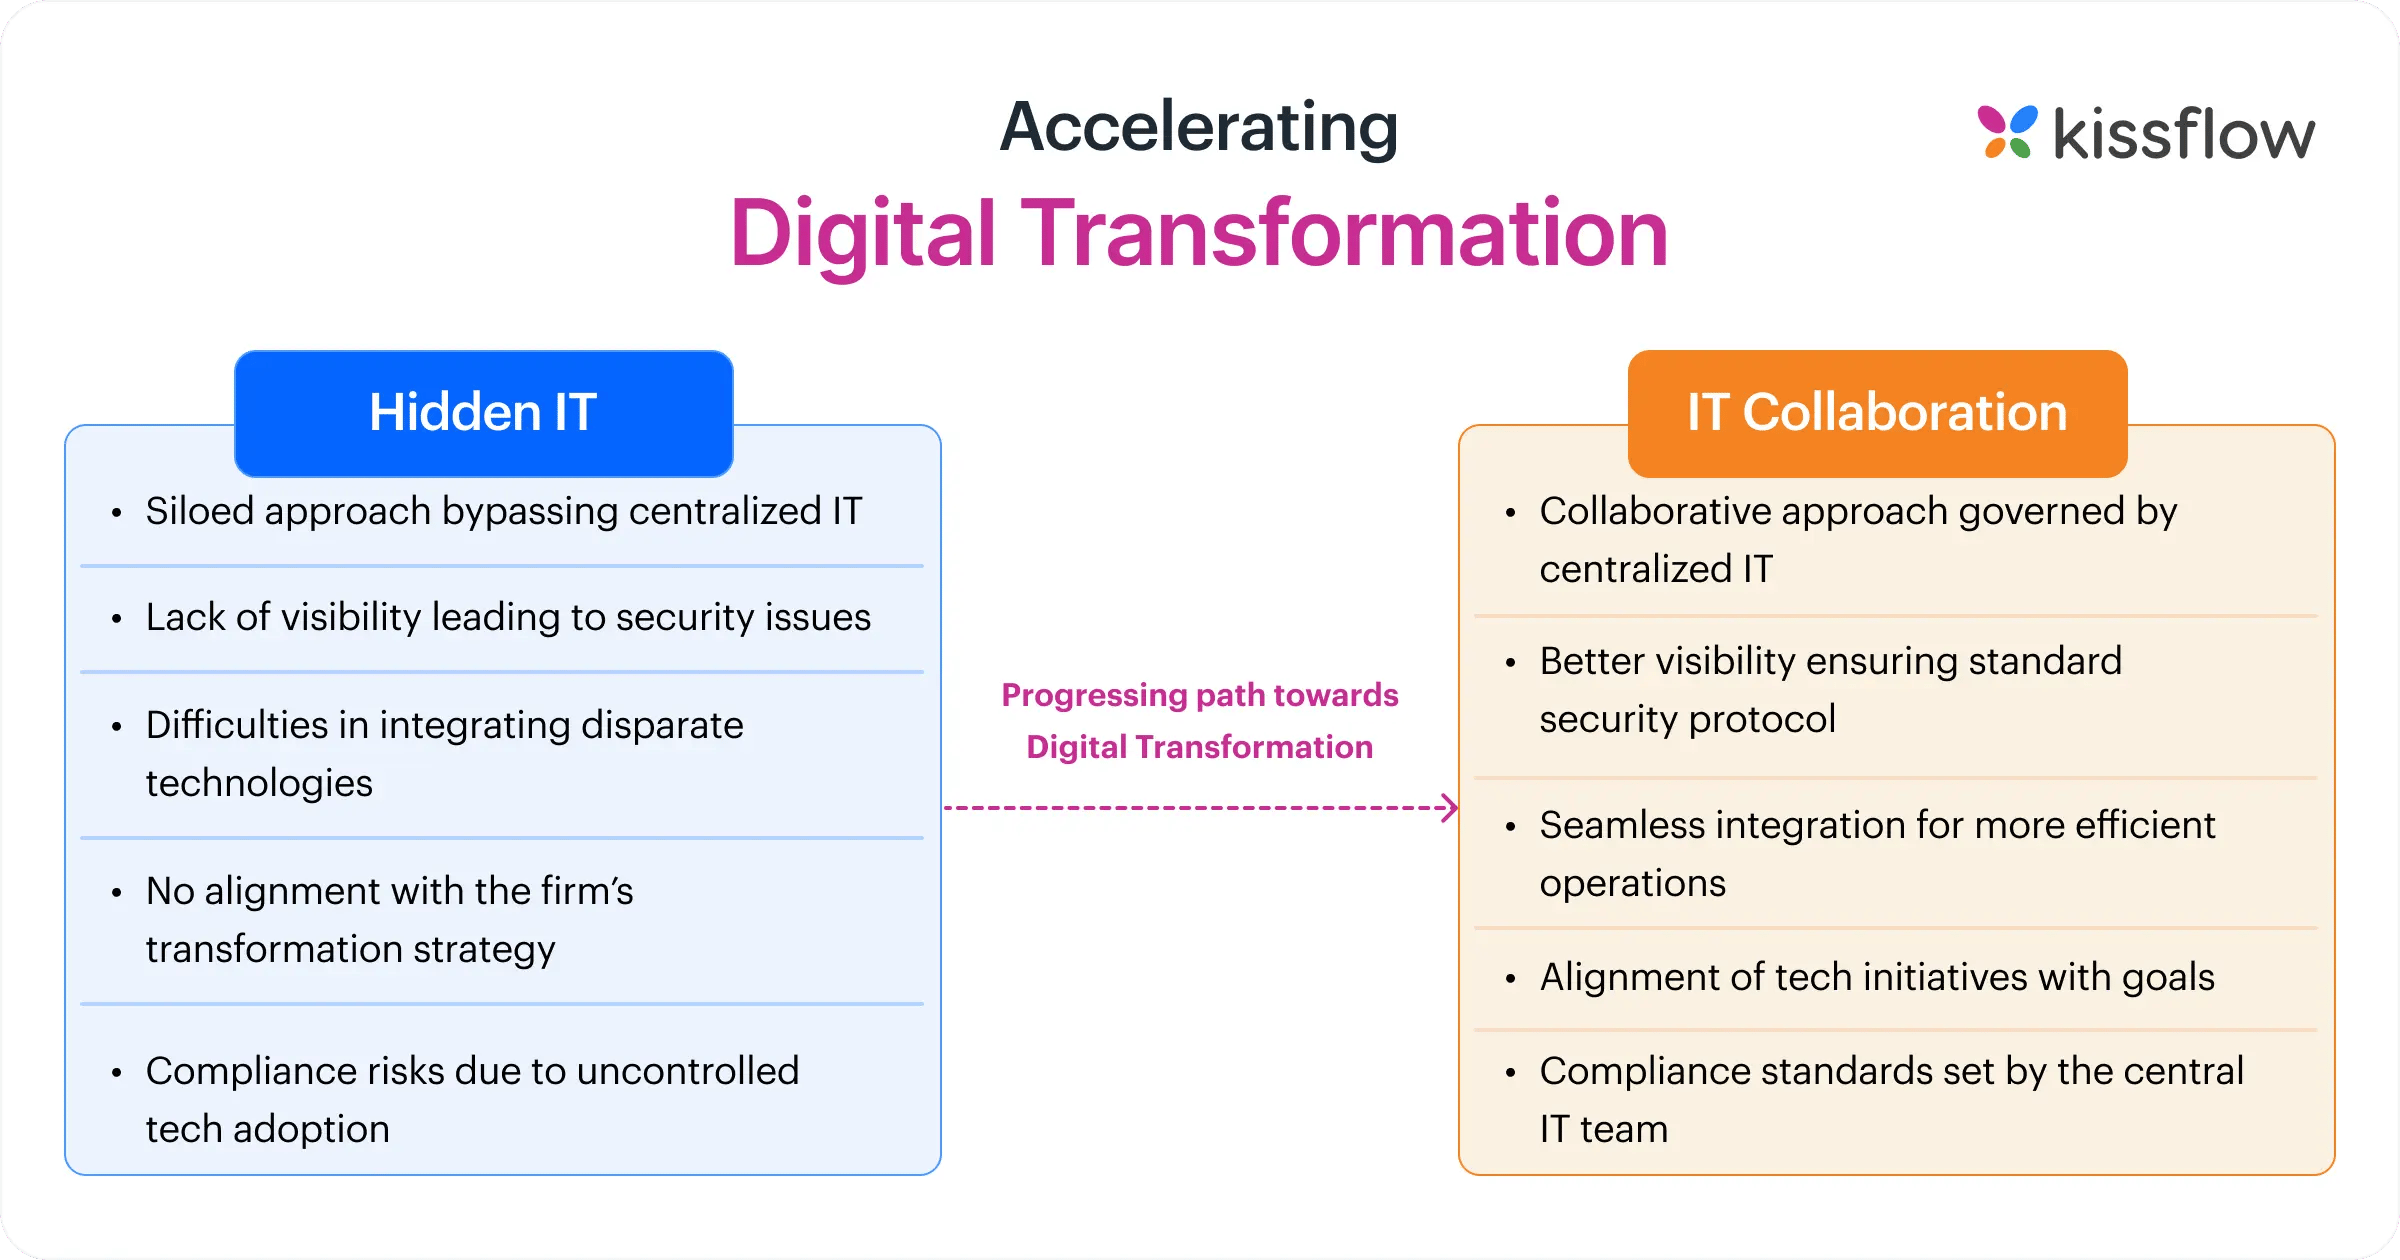 Accelerating digital transformation